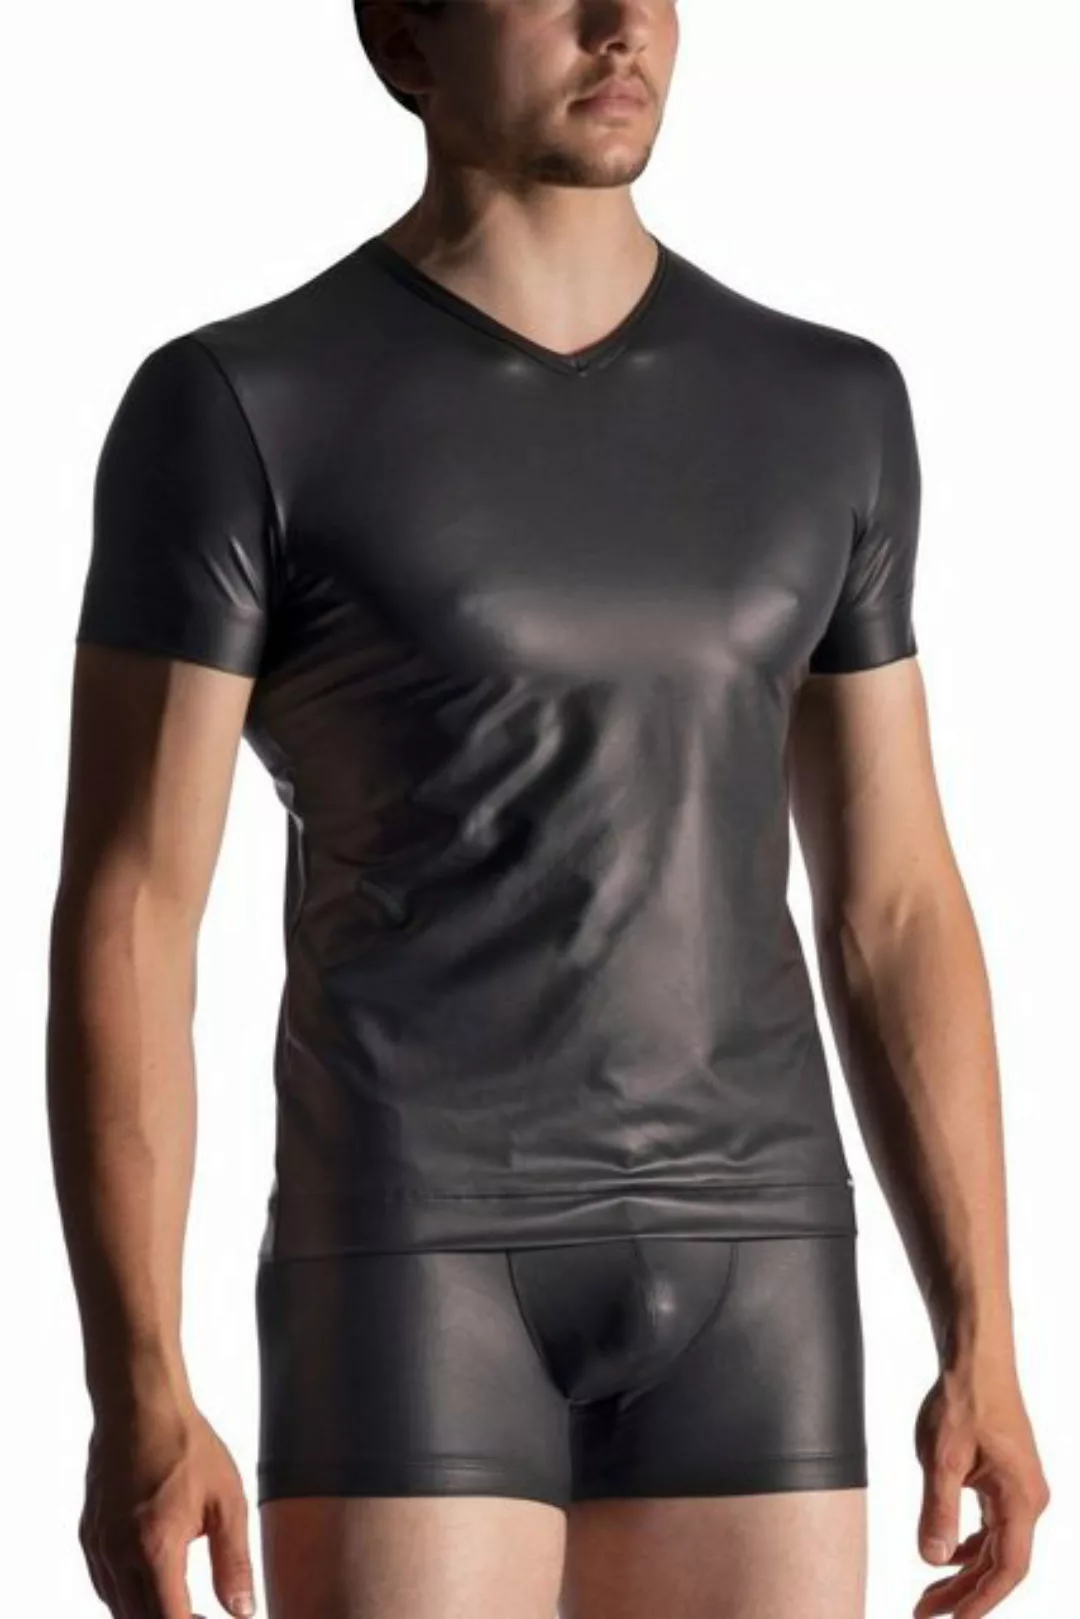 MANSTORE V-Shirt M510 V-Ausschnitt Shirt Clubwear mit Latexfeeling atmungsa günstig online kaufen